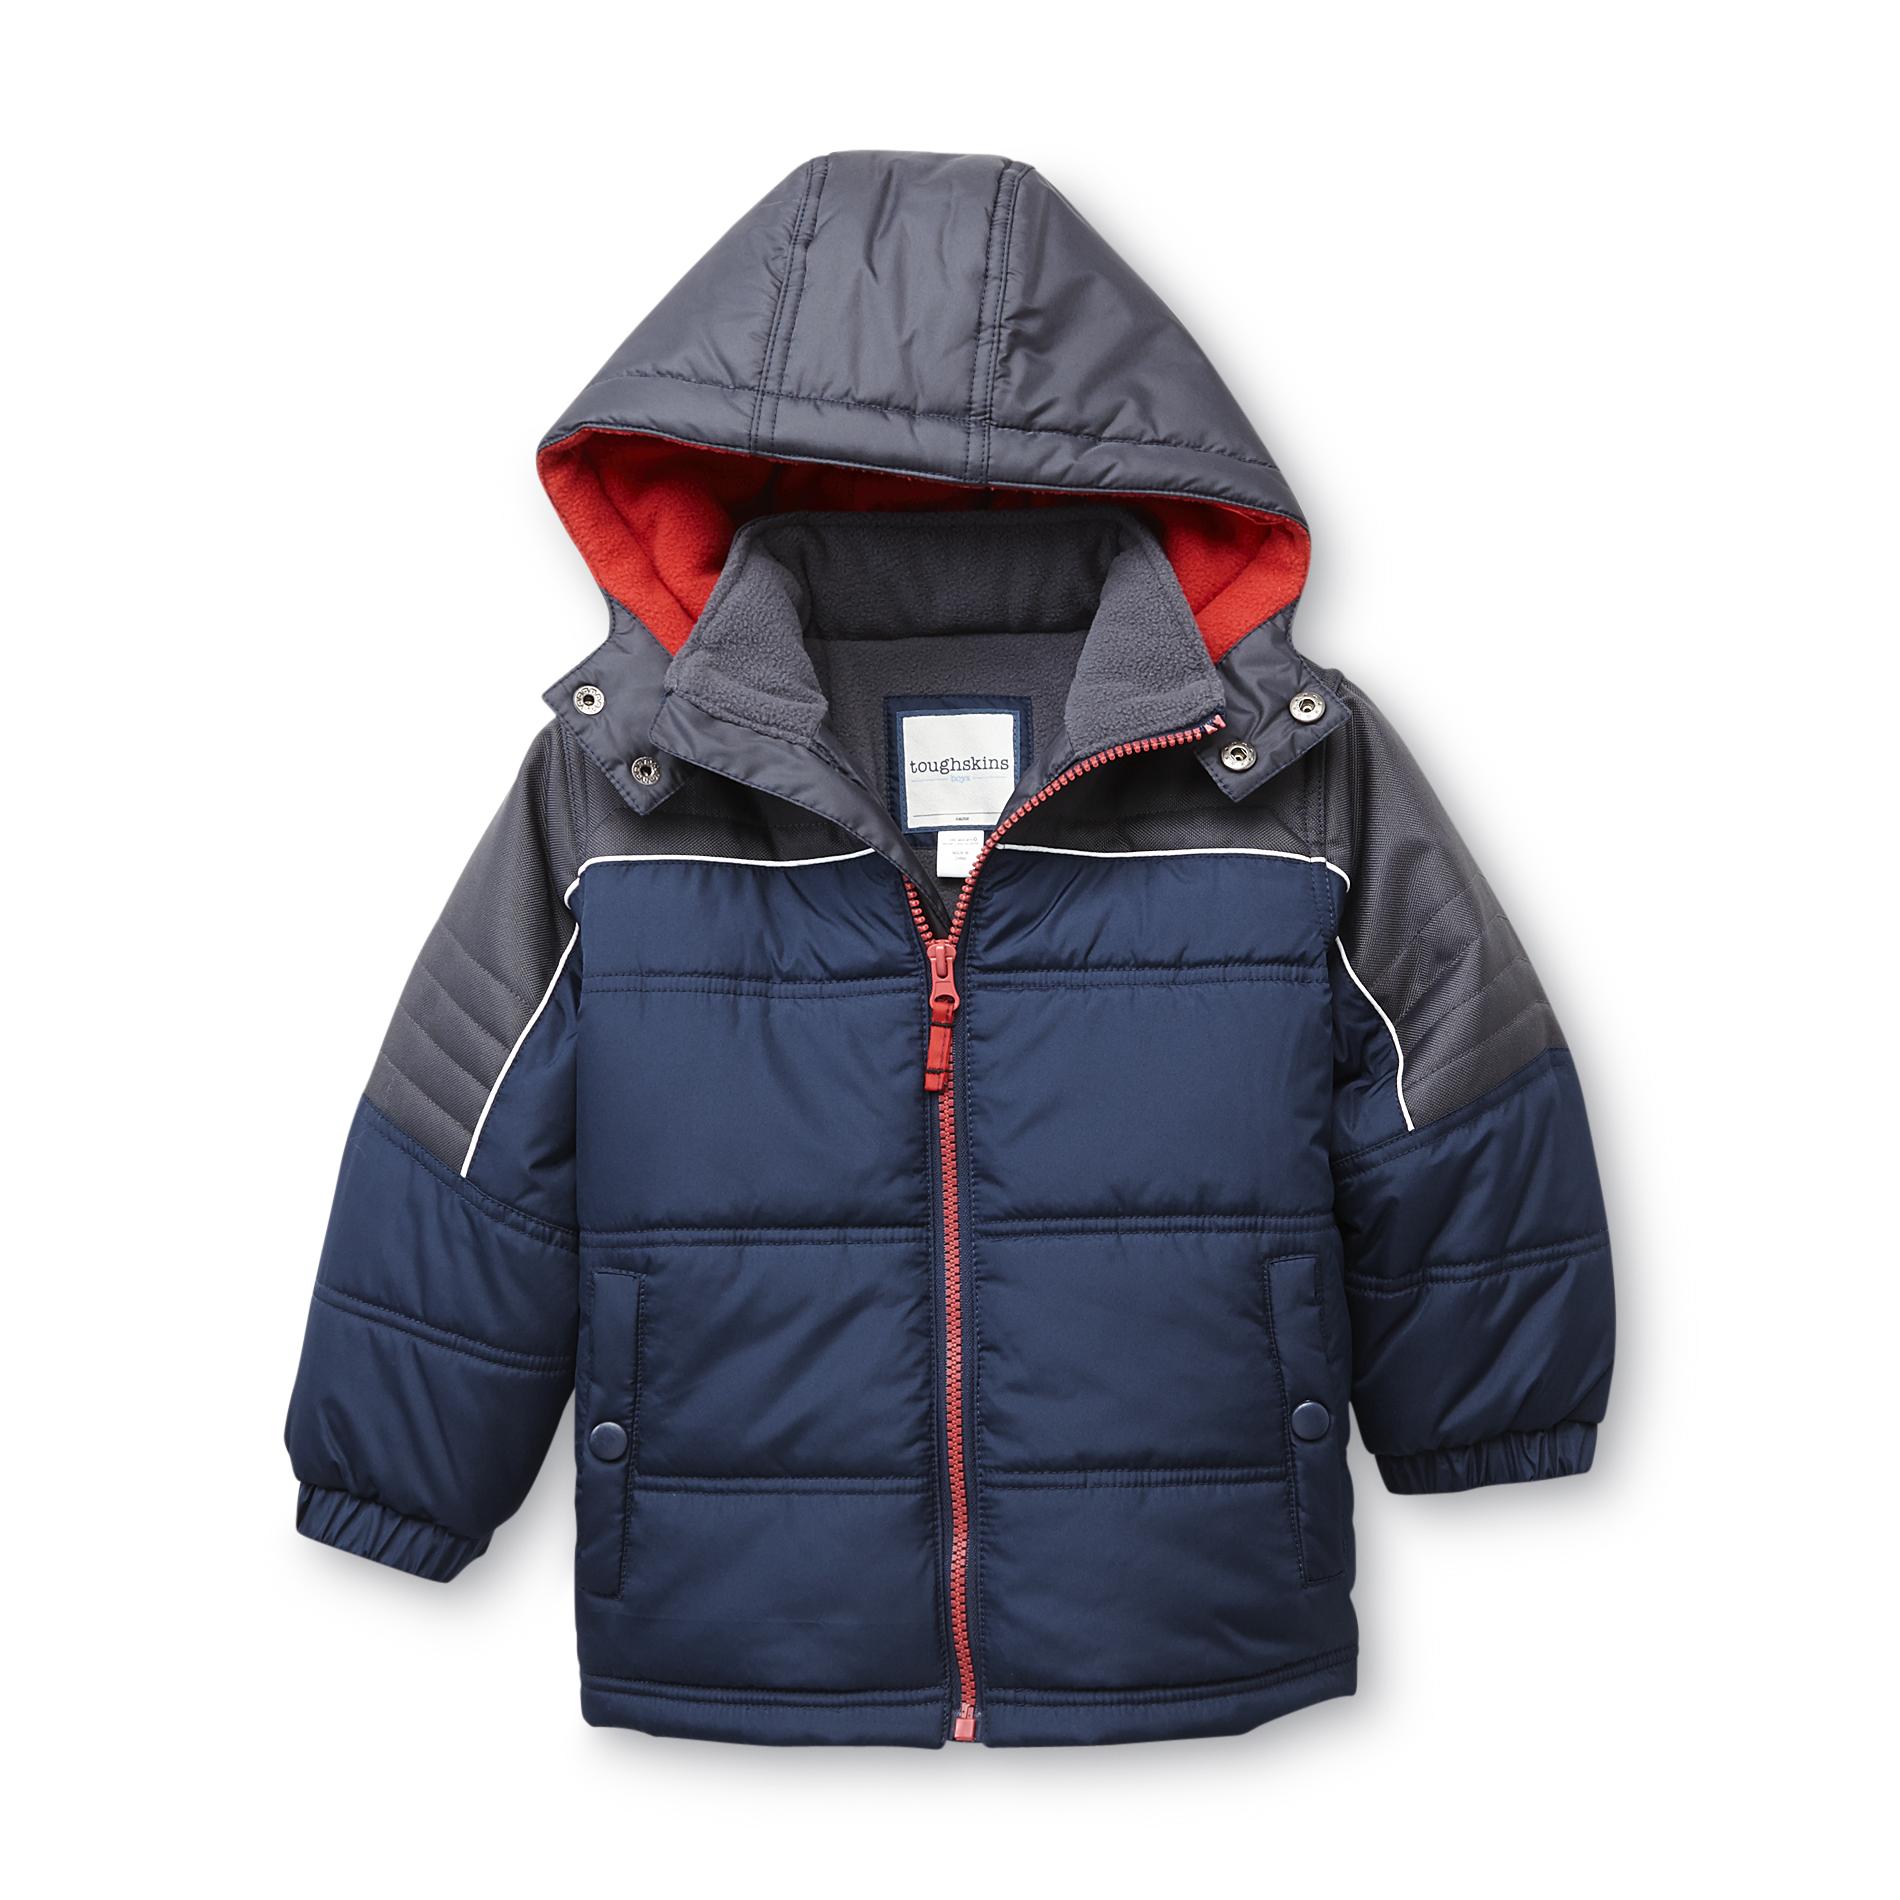 Toughskins Toddler Boy's Hooded Bubble Jacket